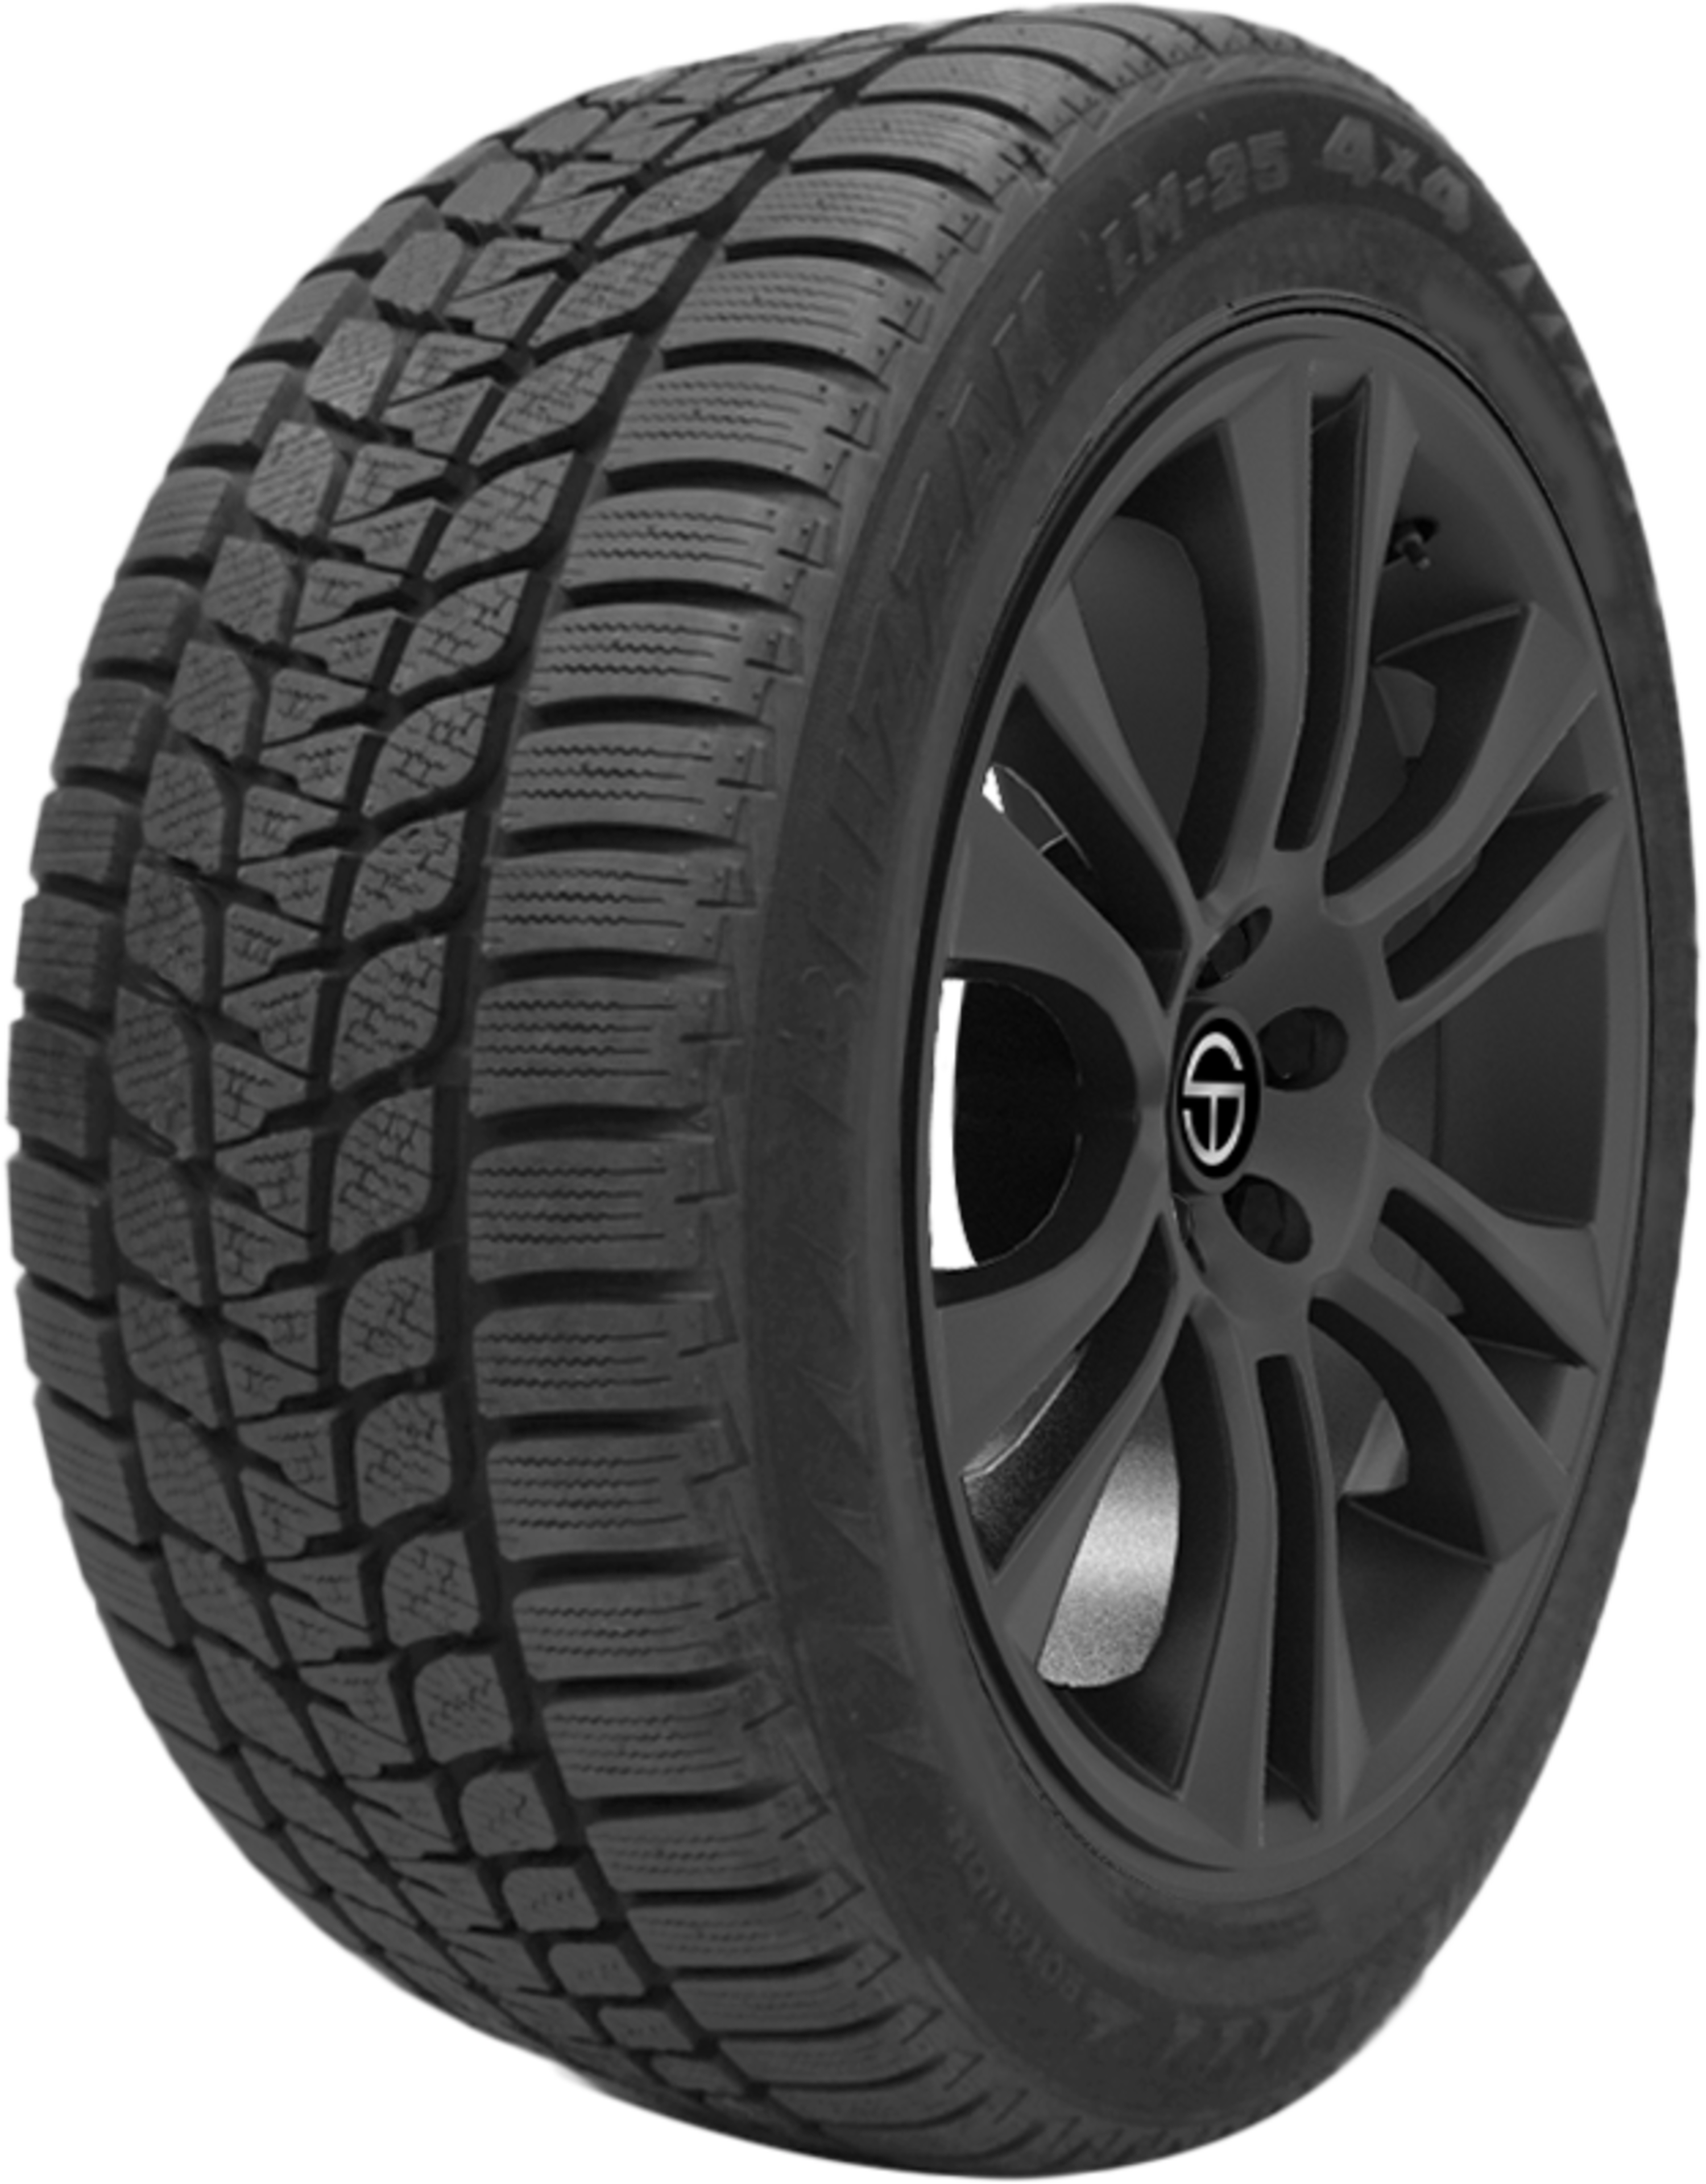 | 4X4 Buy LM-25 Tires SimpleTire Bridgestone Blizzak MOE Online